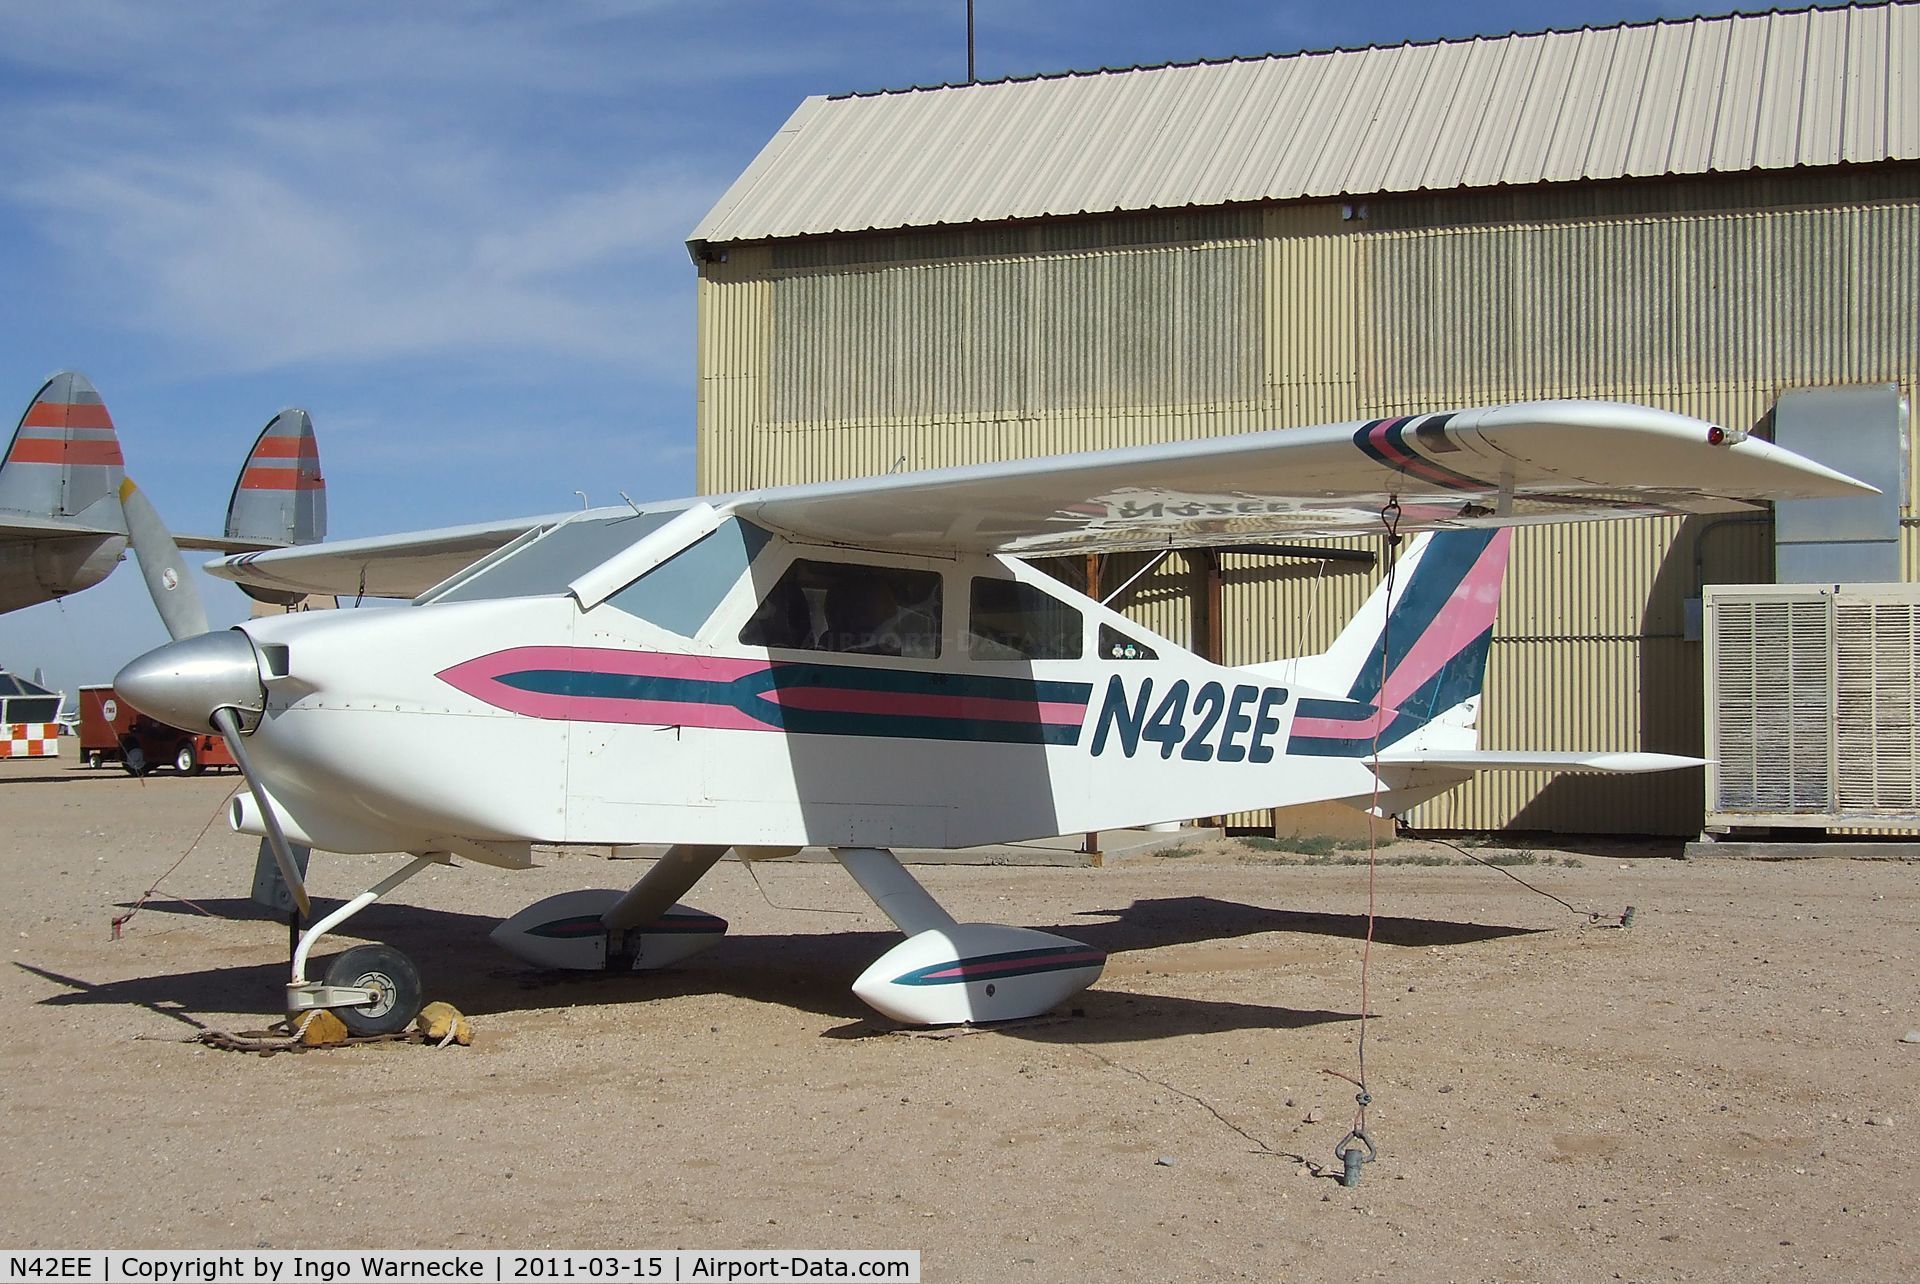 N42EE, Bede BD-4 C/N 382, Bede (Hartman / Wright) BD-4 at the Pima Air & Space Museum, Tucson AZ